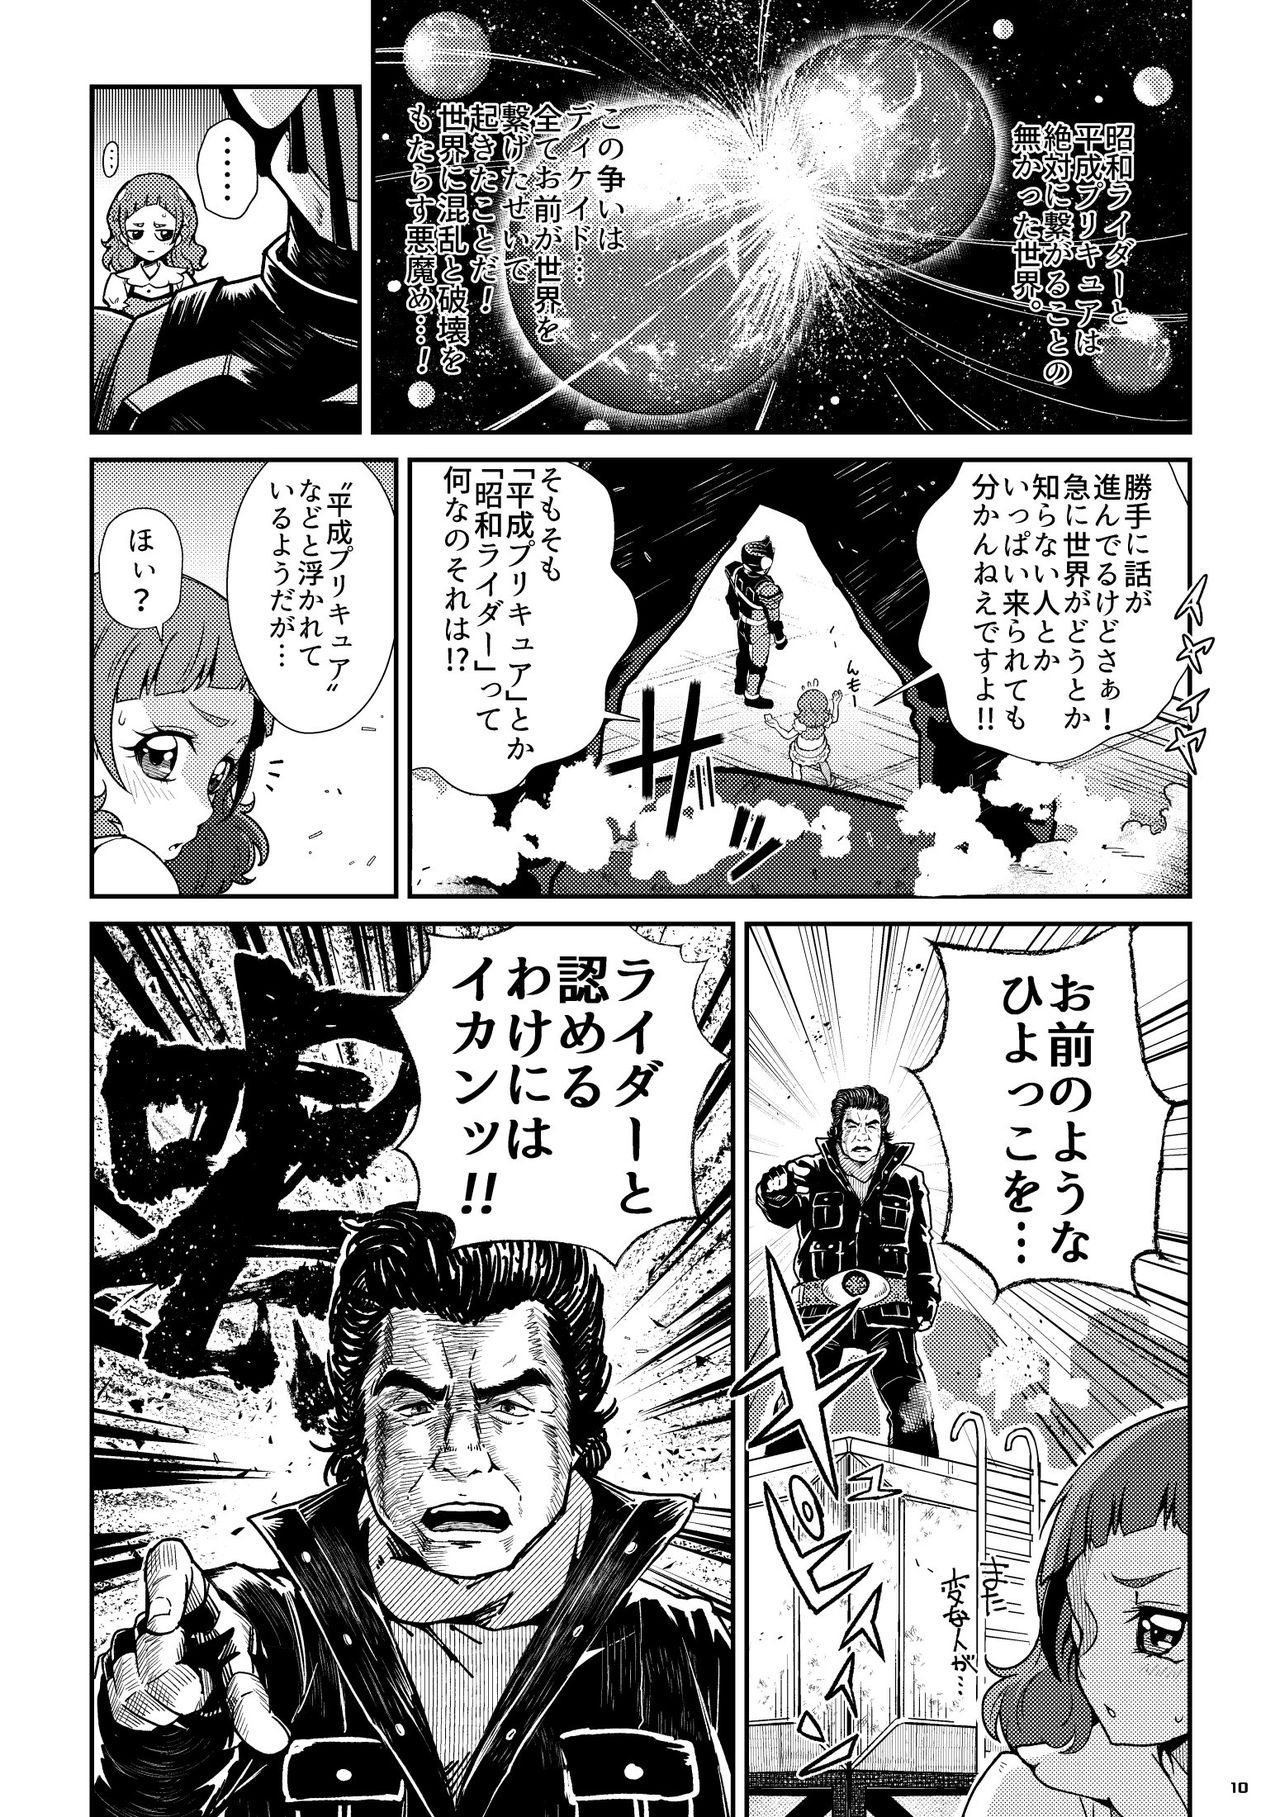 Heisei Precure vs Showa Raider Anthology Battle (Shin Nankai Daikessen) [『真・南海大決戦』 (よろず)] 平成プリキュア対昭和ライダー アンソロジー大戦 10